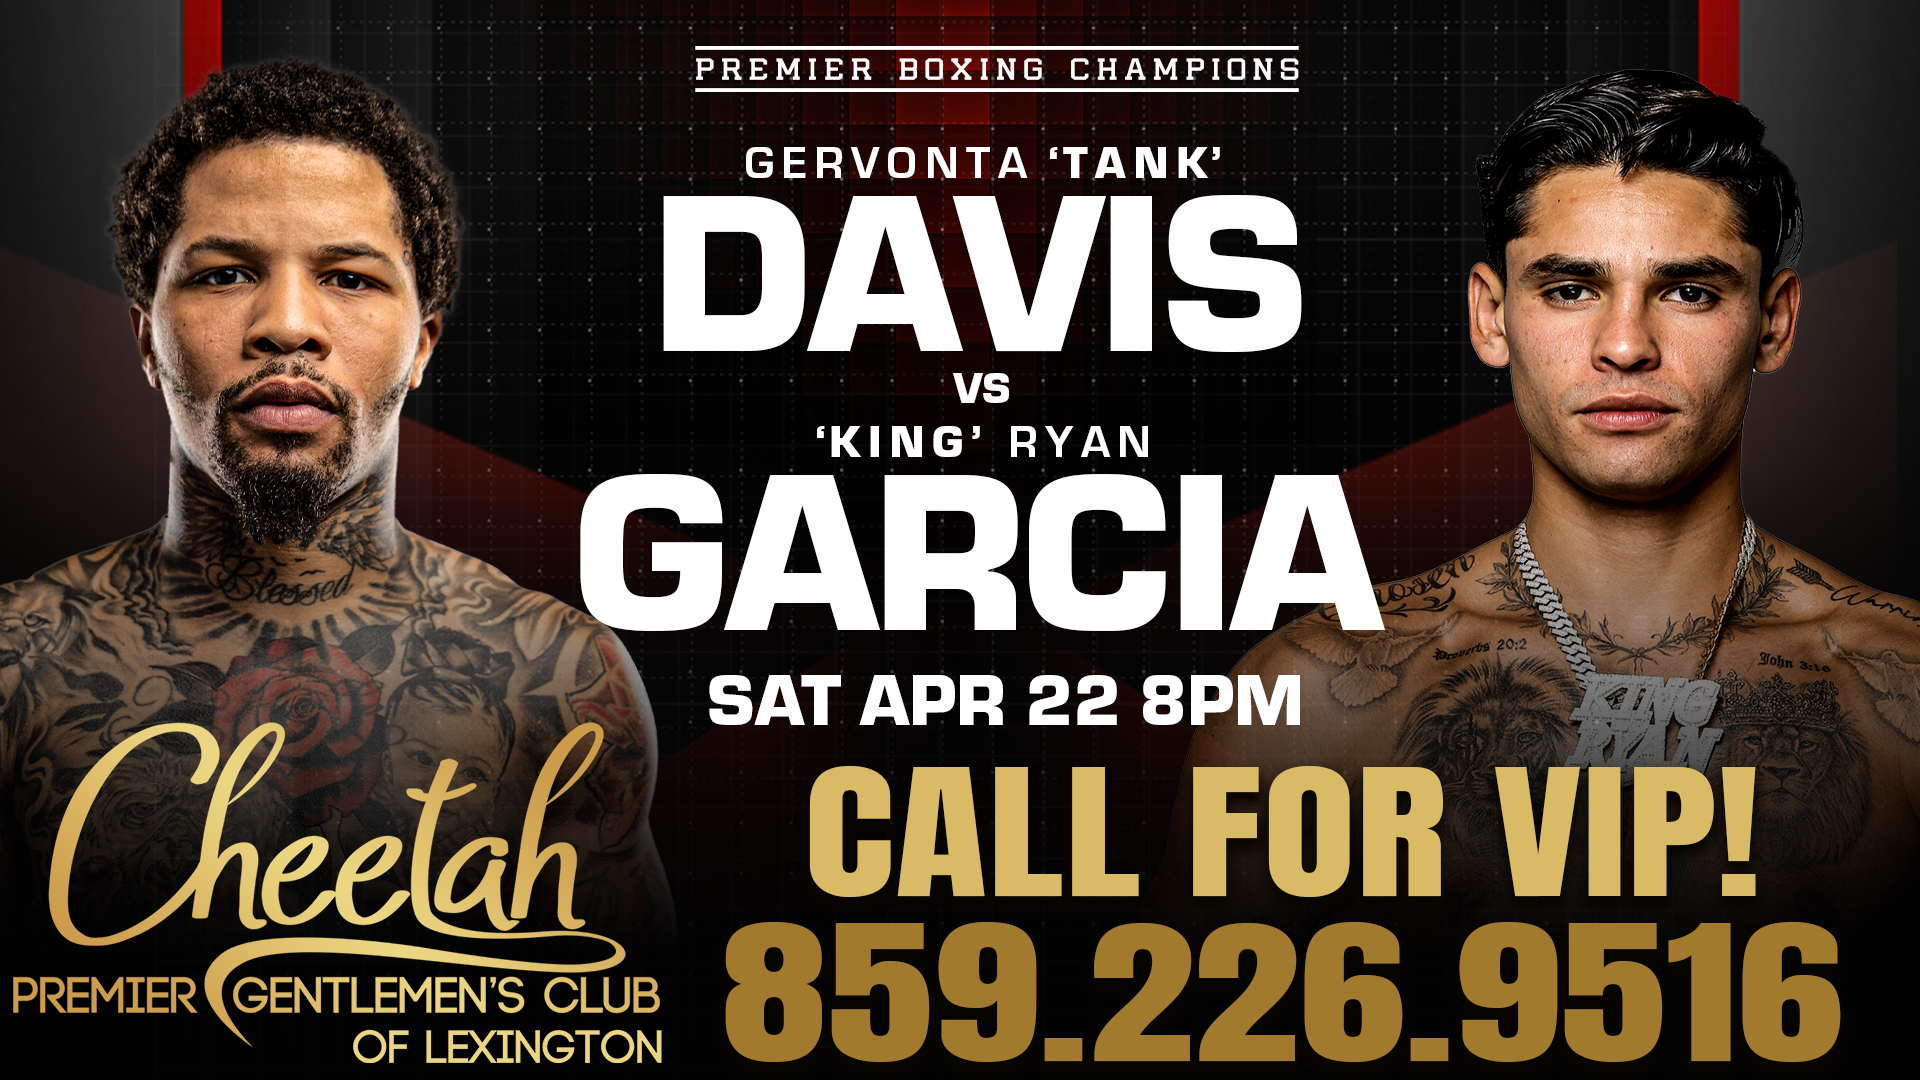 Davis vs Garcia boxing match